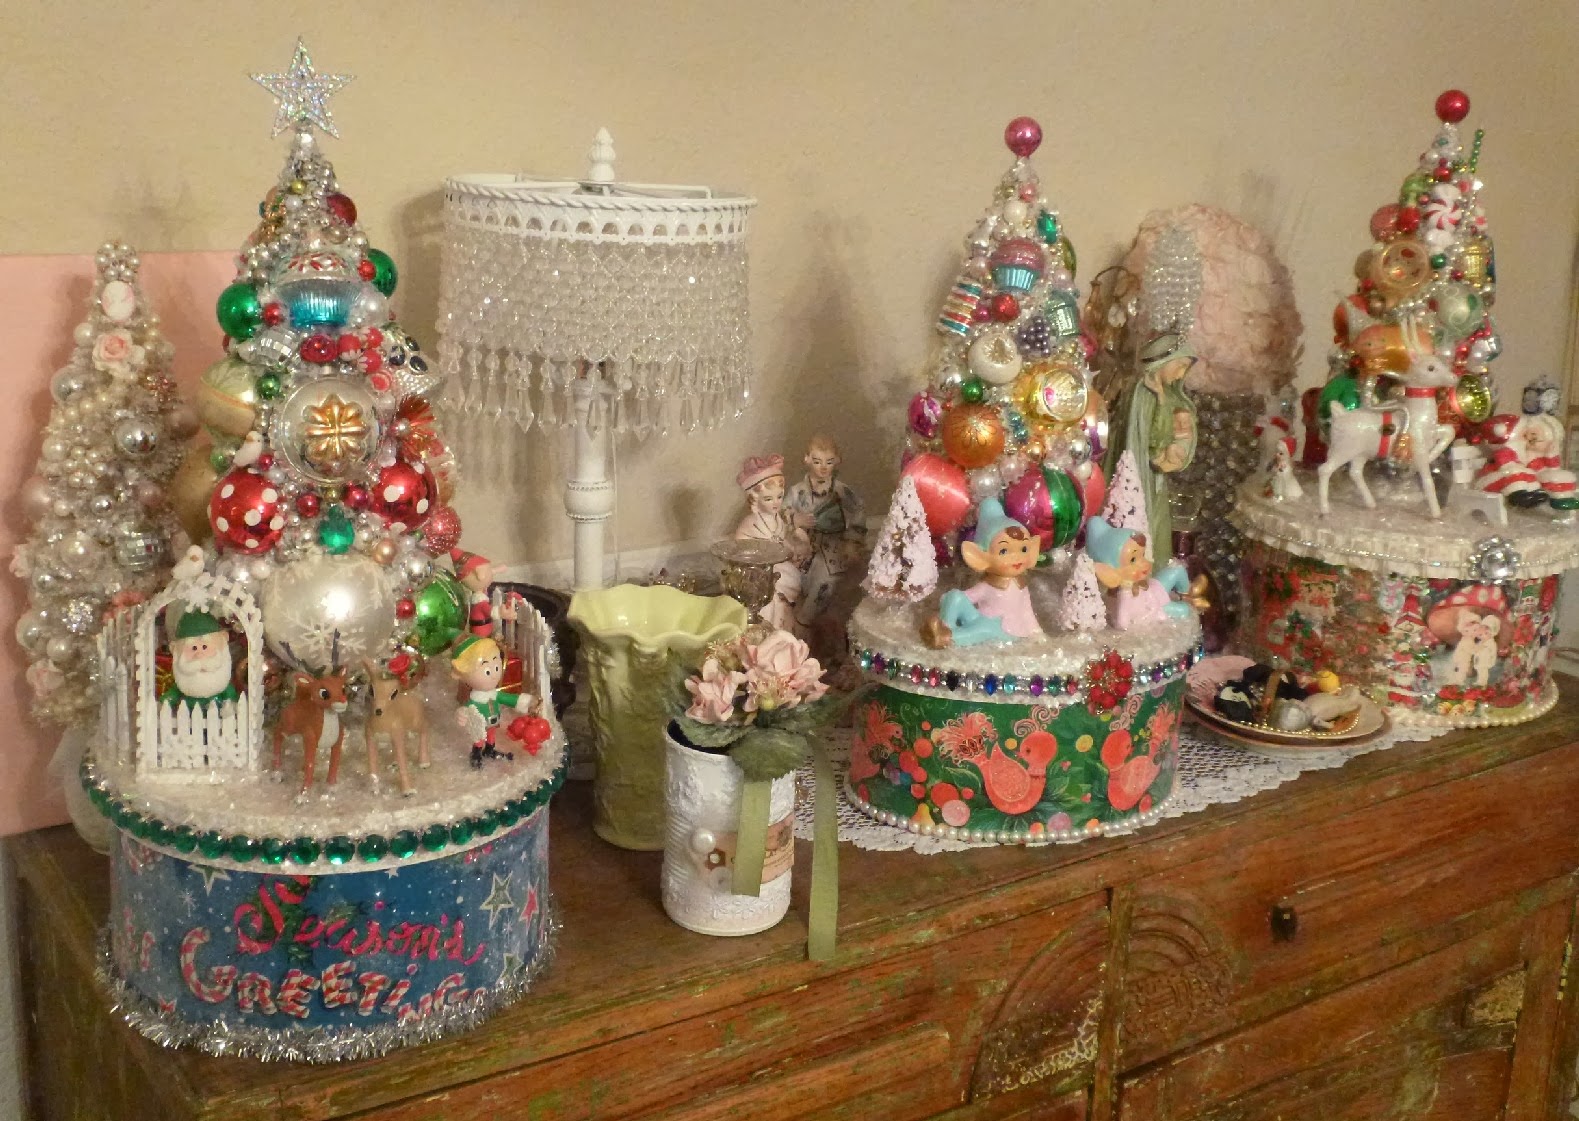 Ms Bingles Vintage Christmas: It's Been a Christmas Crazy season!